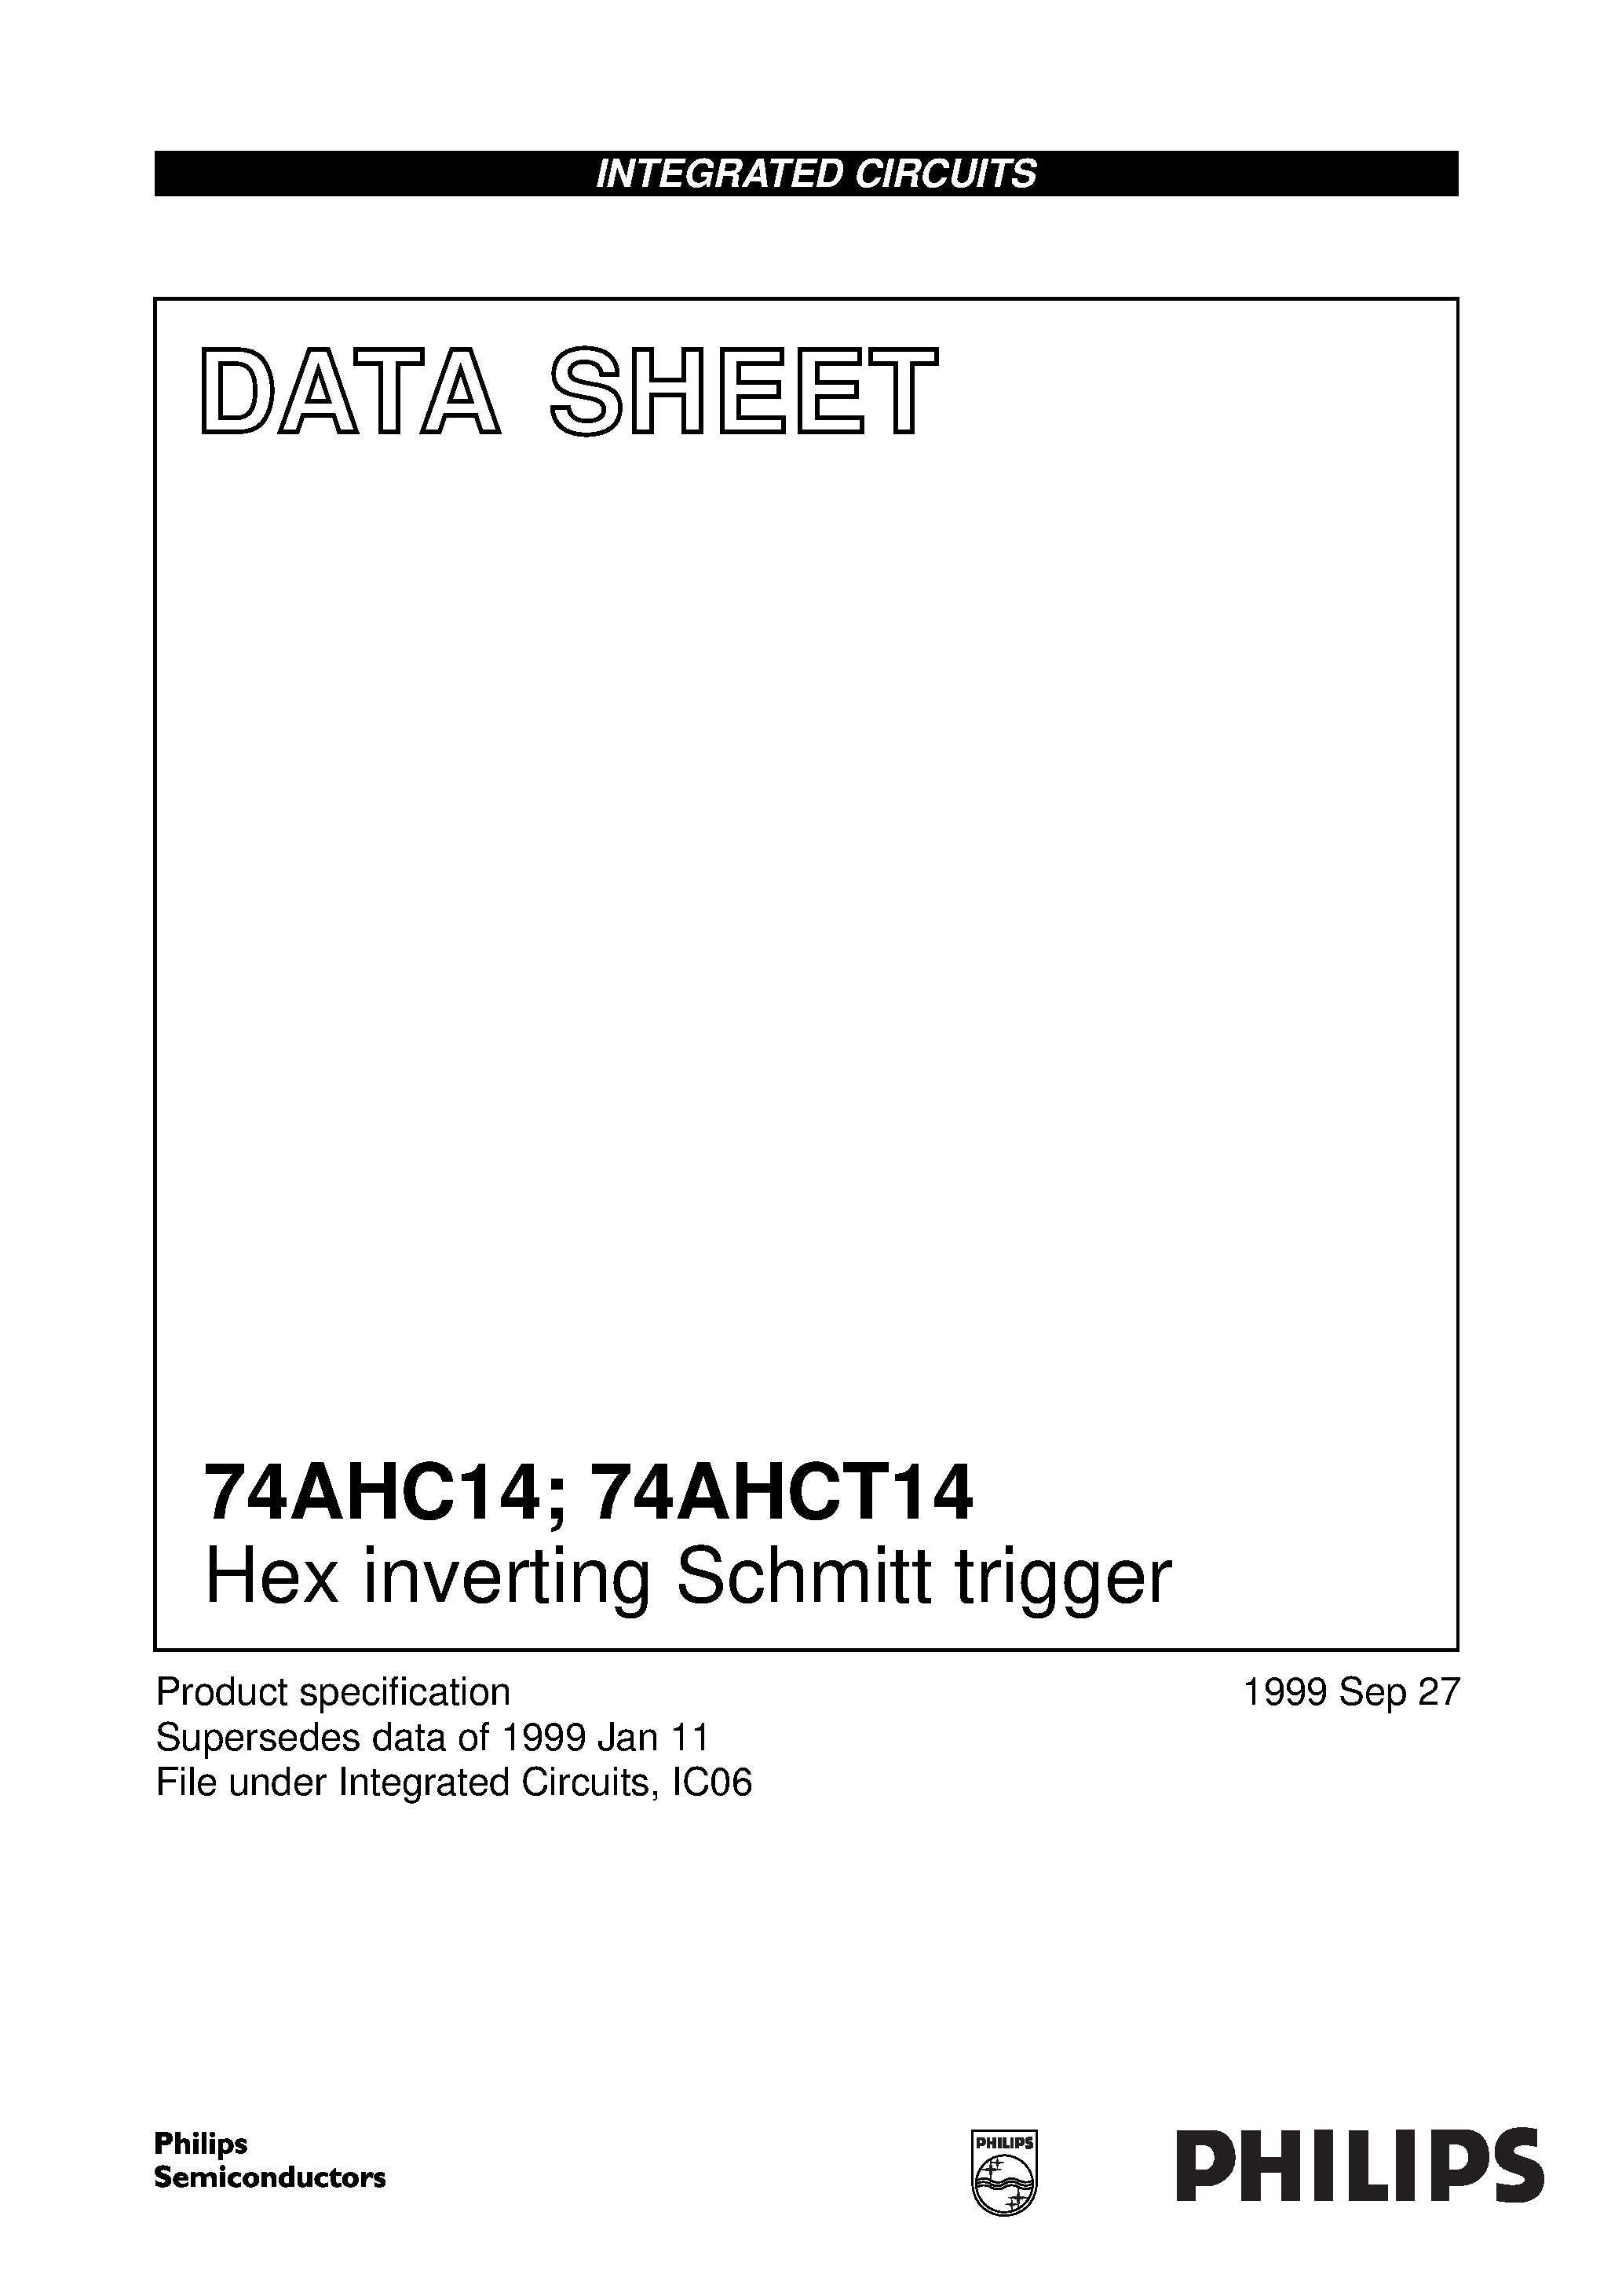 Даташит 74AHC14PW - Hex inverting Schmitt trigger страница 1